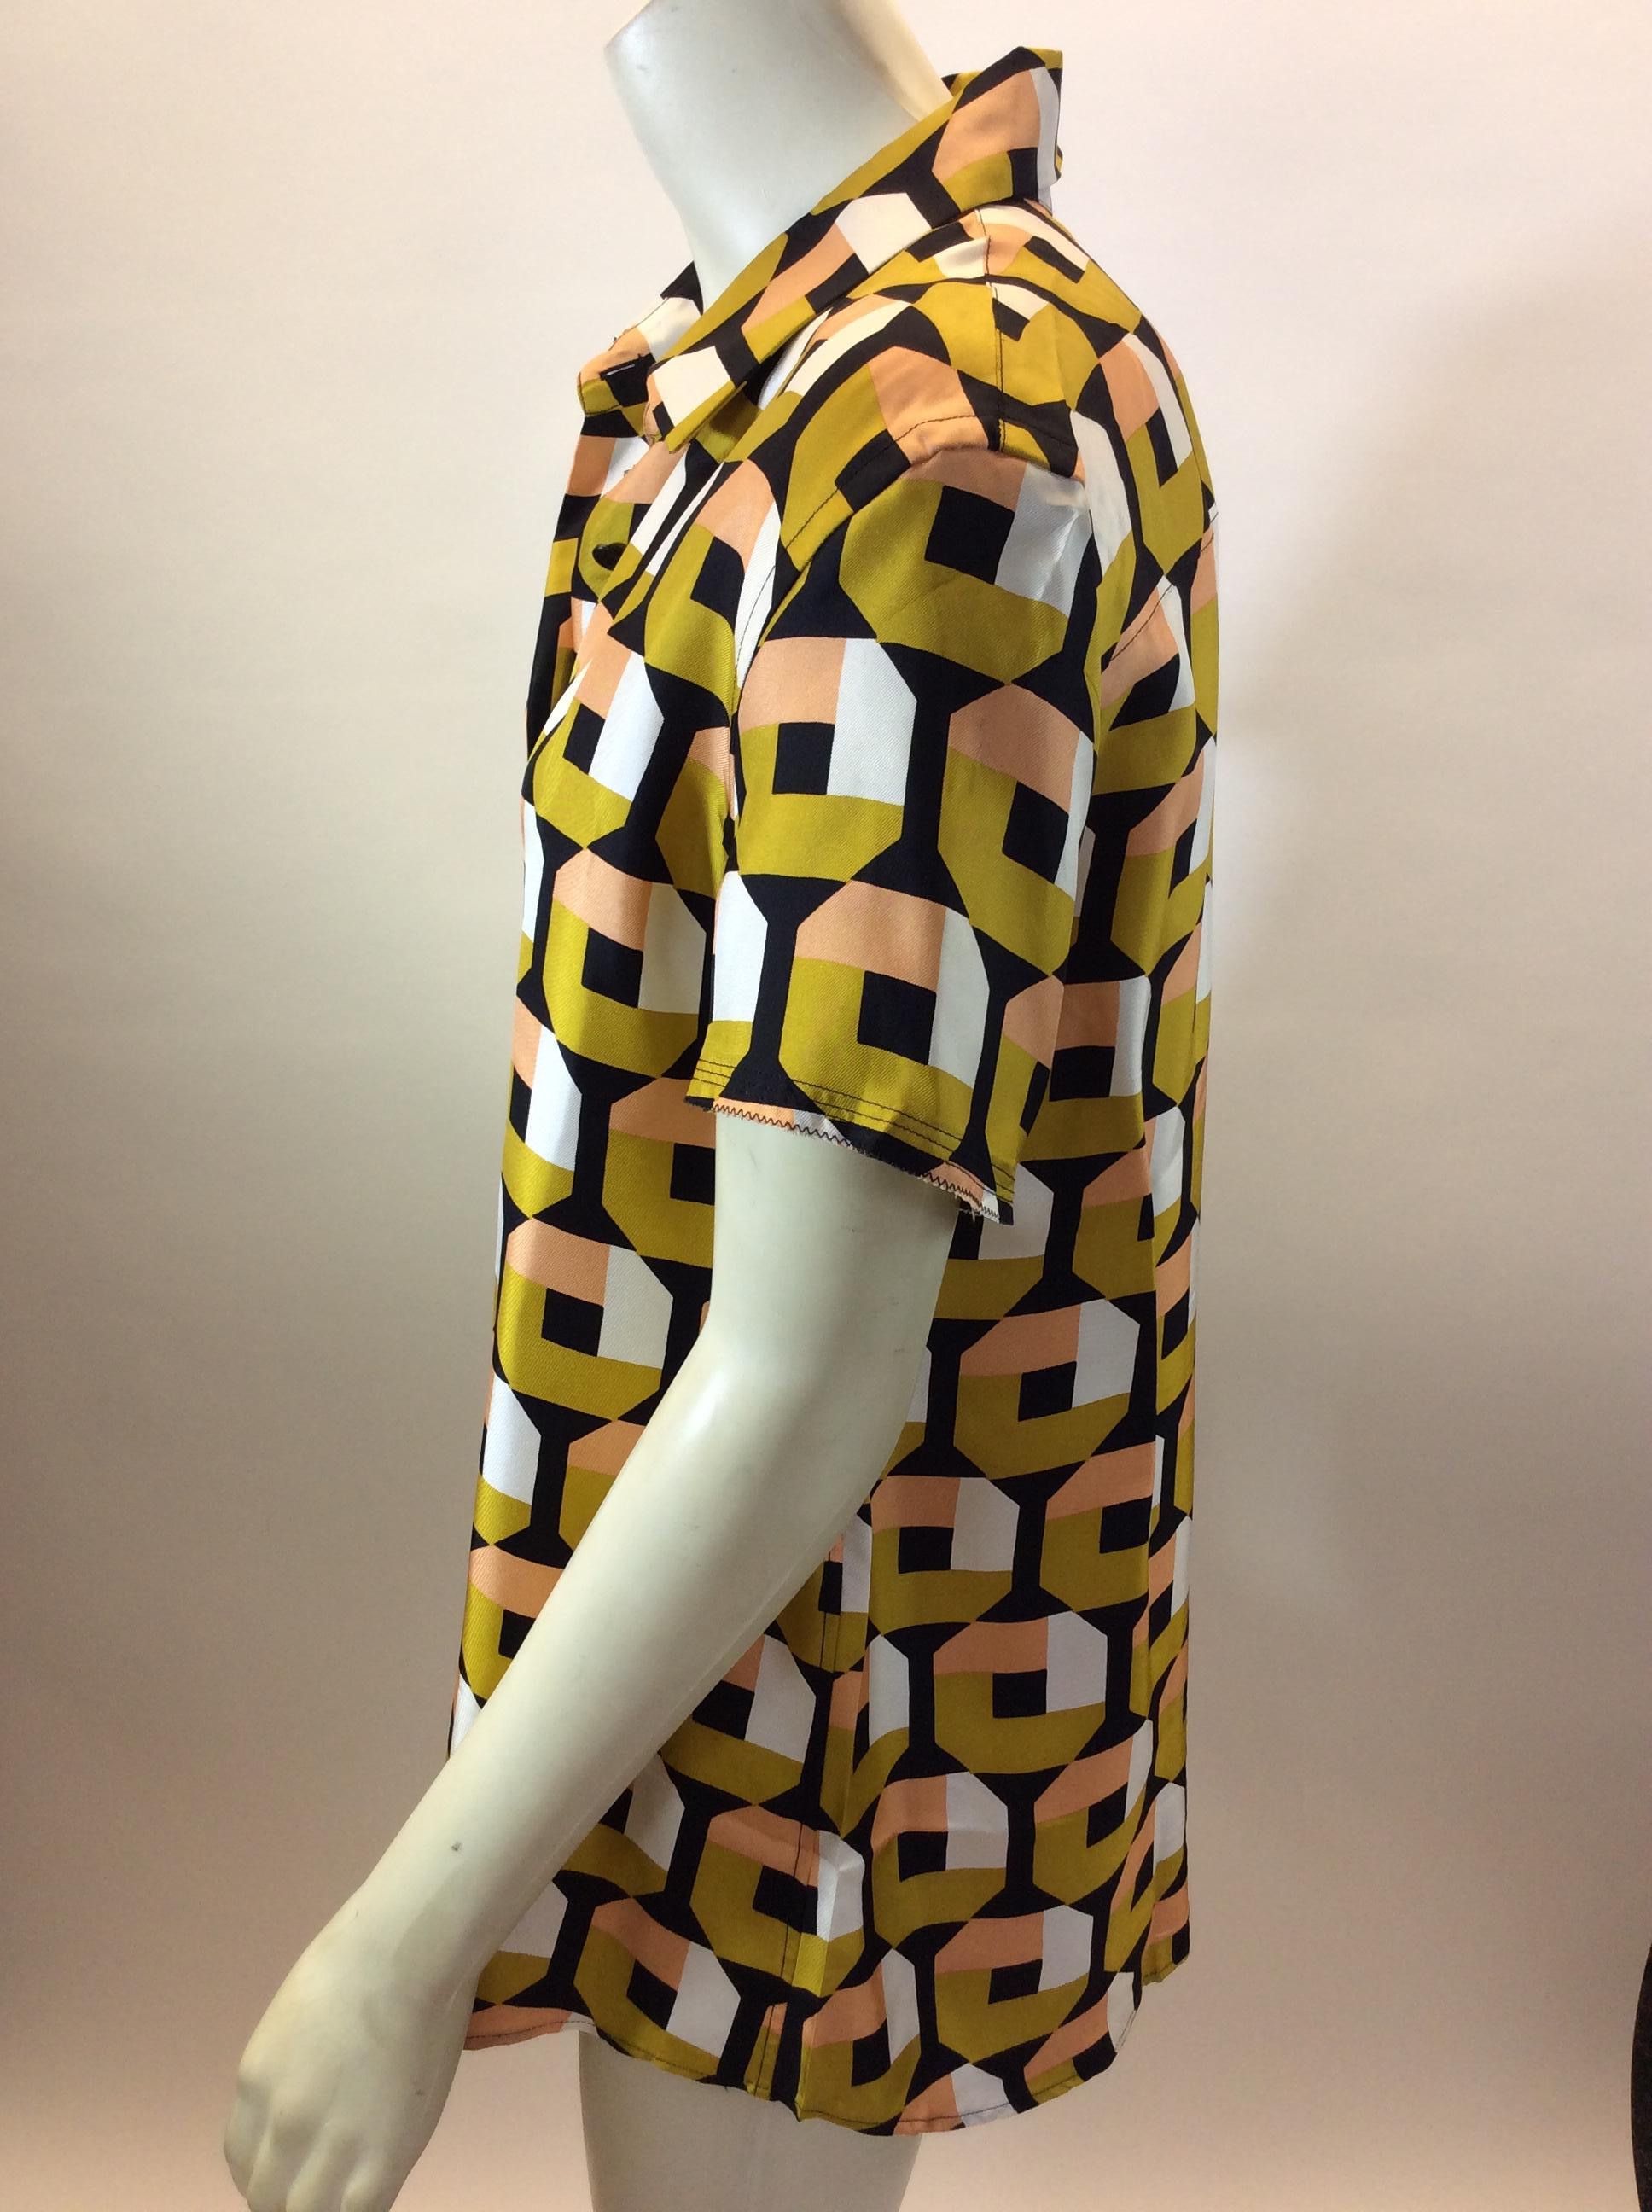 Prada Multi-Color Print Silk Blouse
$150
Made in Italy
100% Silk
Size 44
Length 26